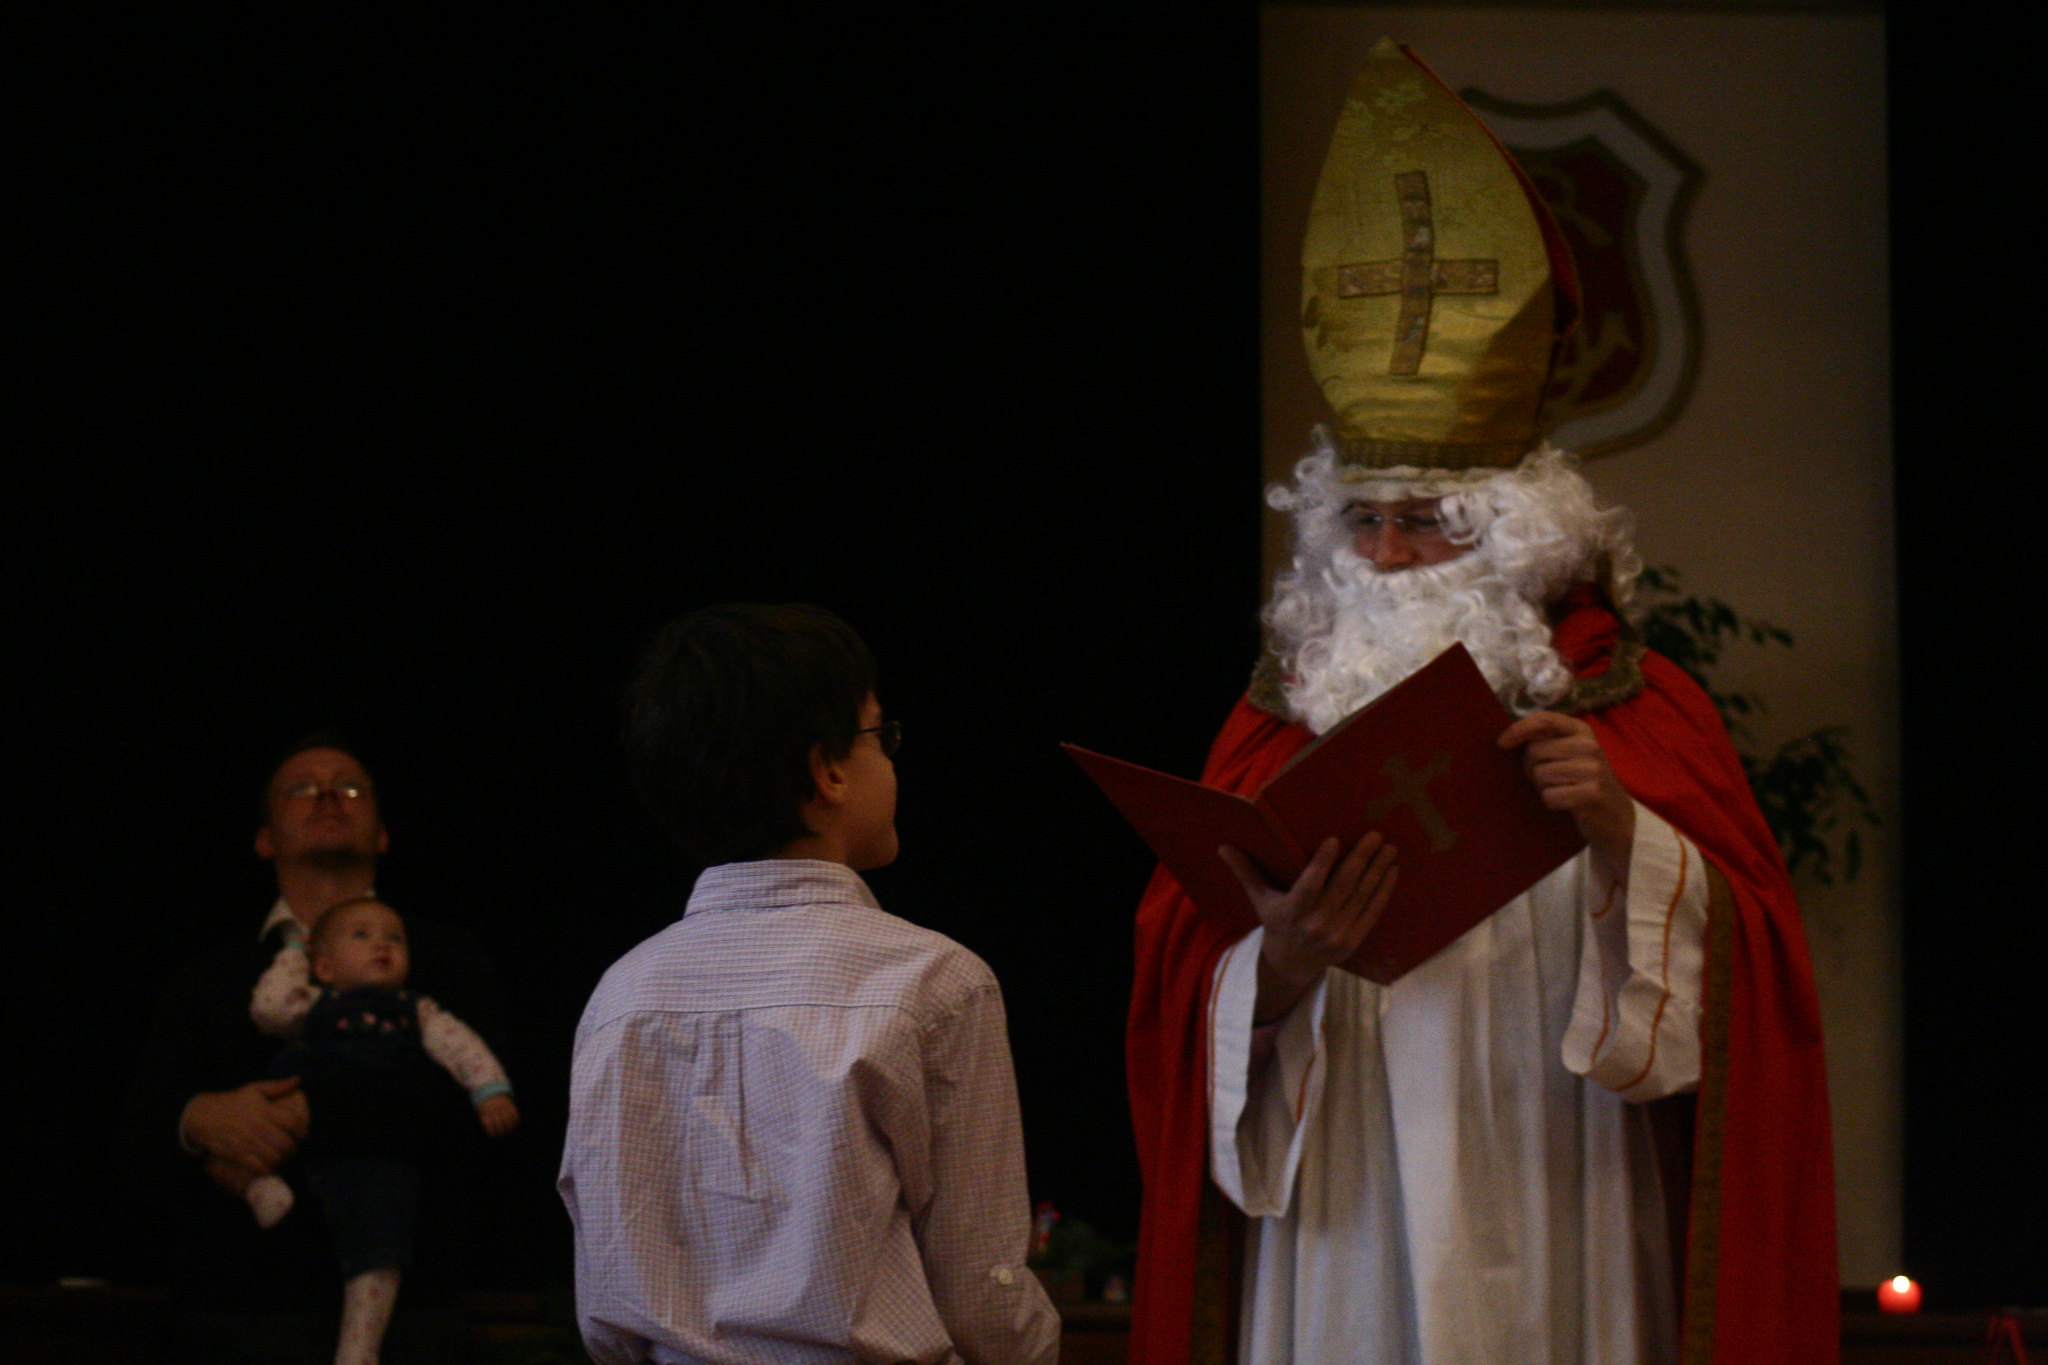 Sankt Nikolaus consults his book